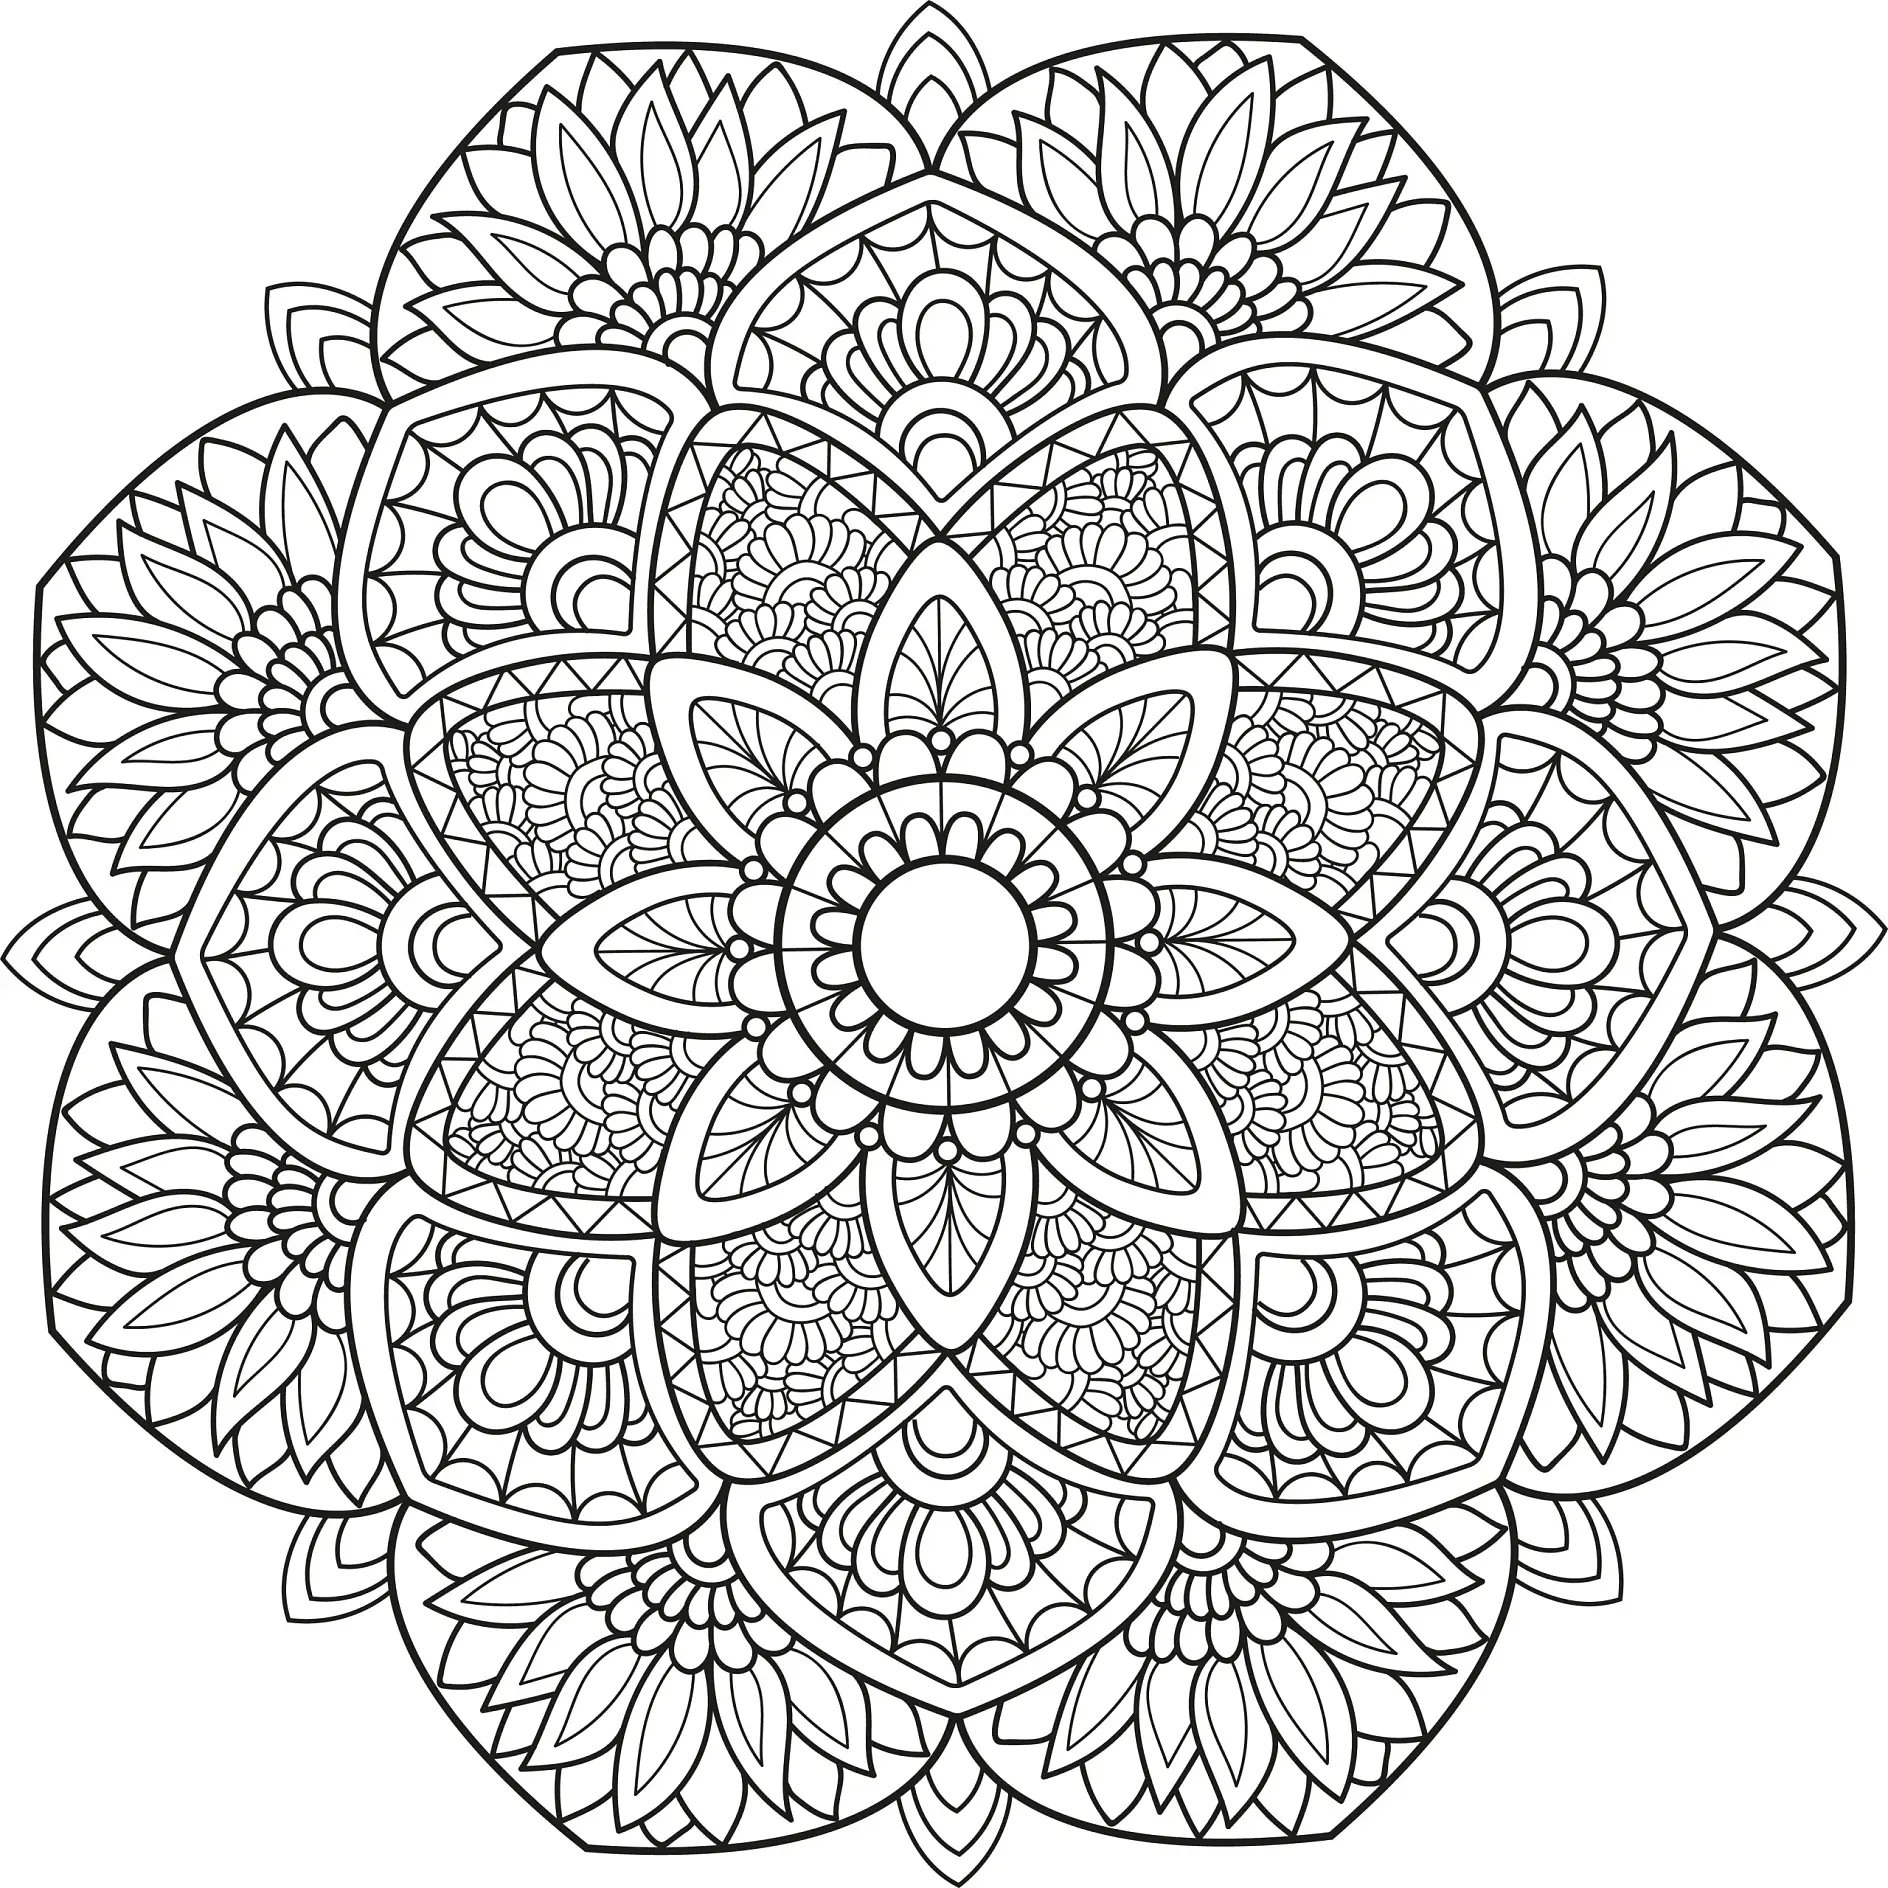 Ausmalbild Mandala mit blumenartigen Mustern